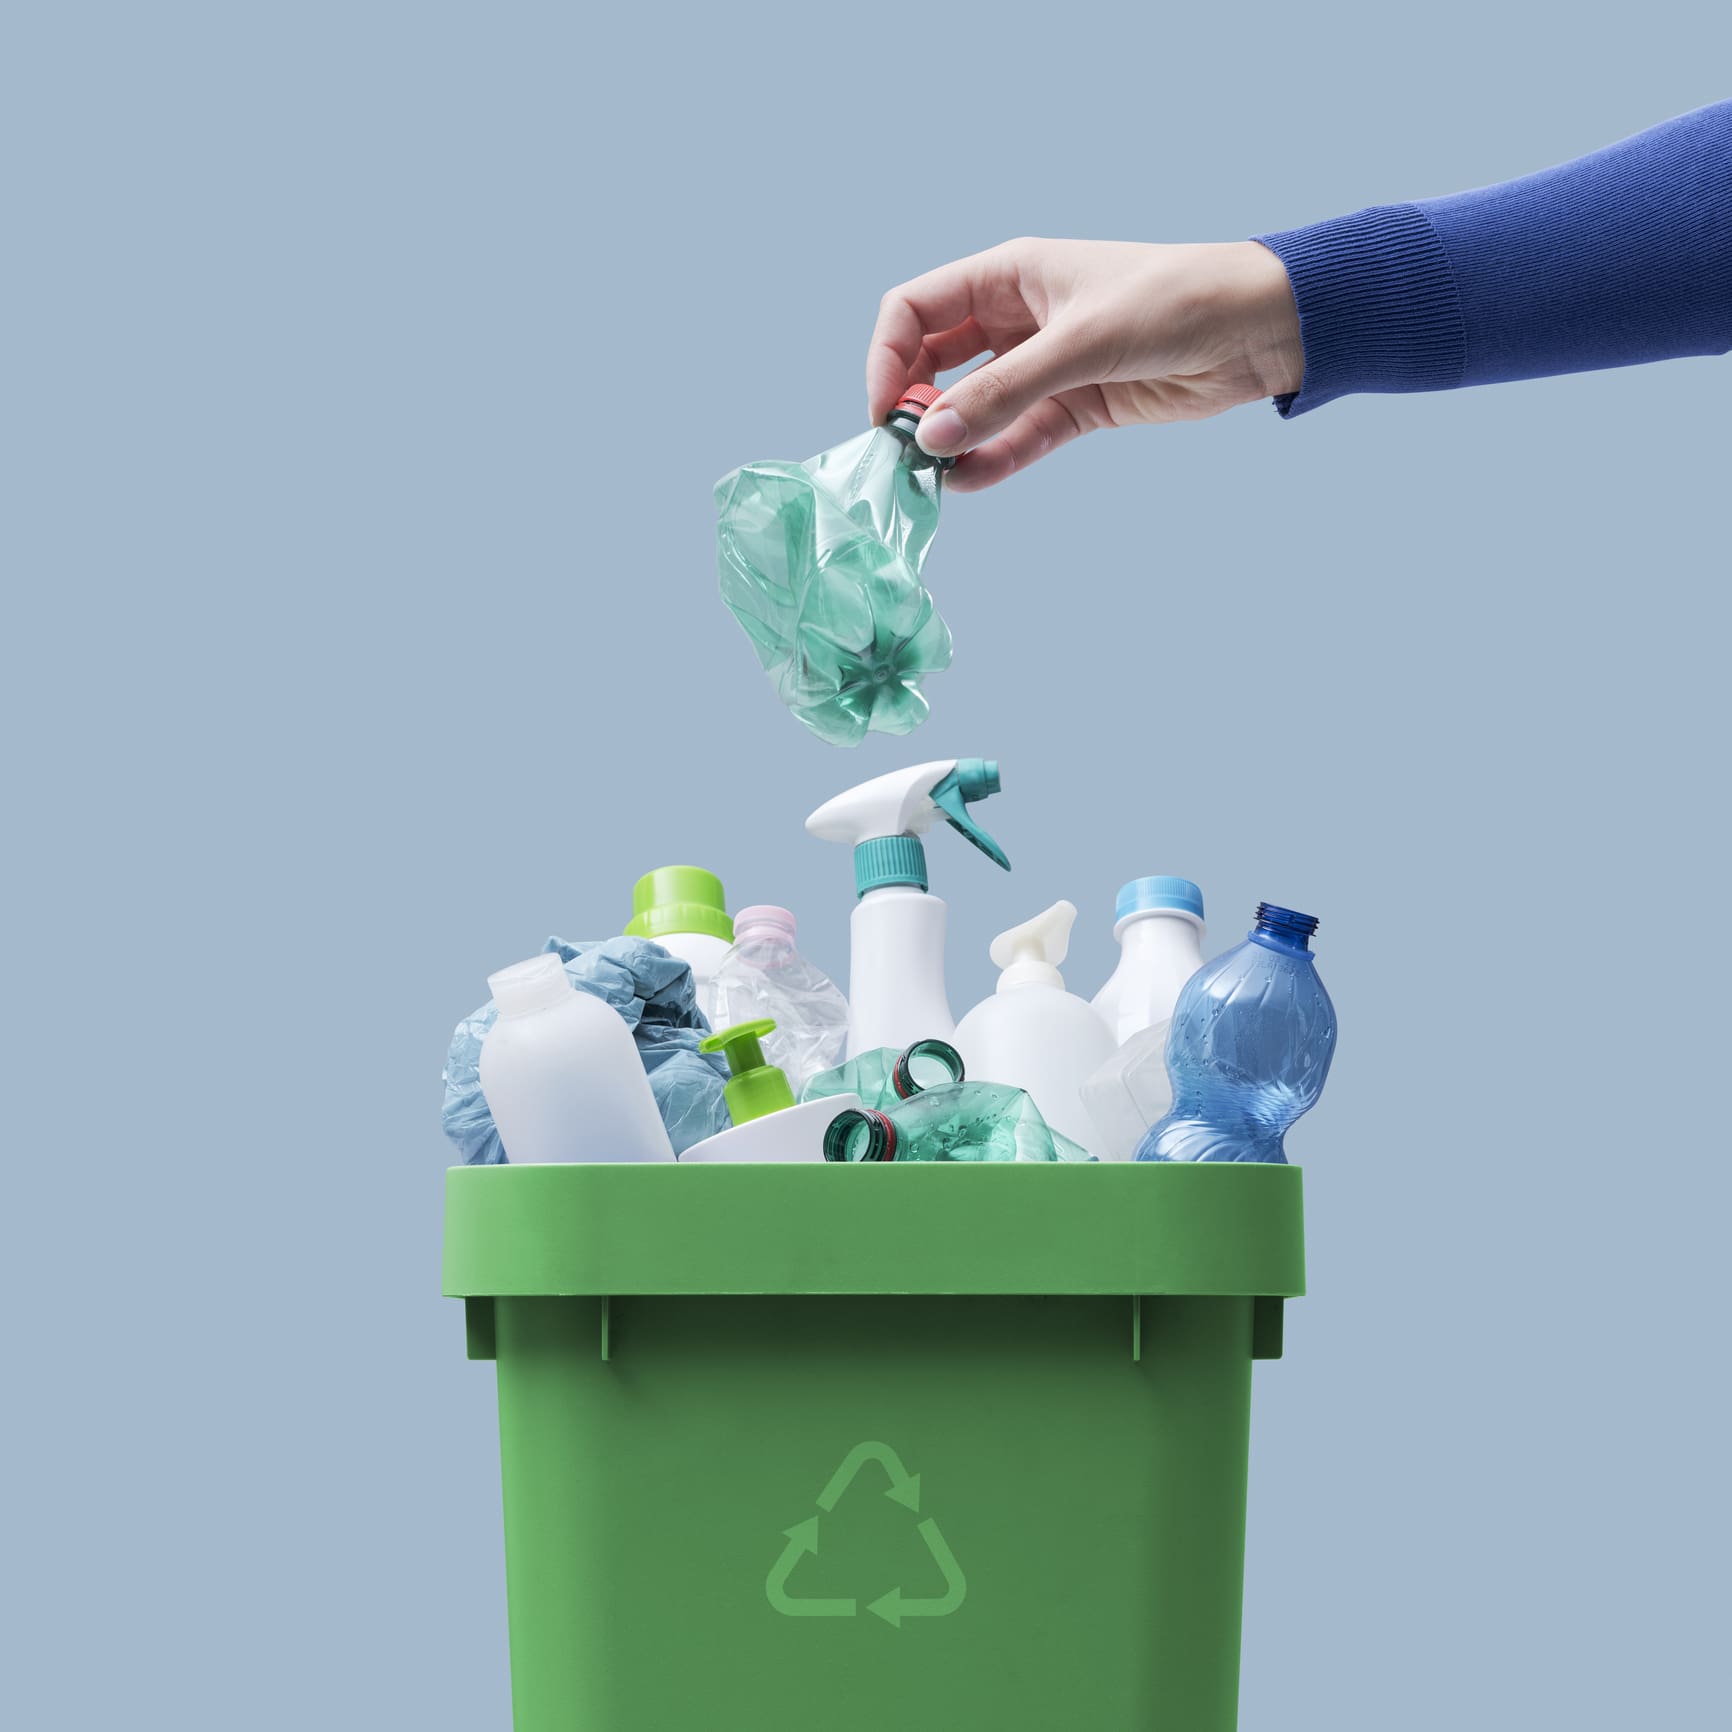 Woman putting a plastic bottle in a full recycling bin.